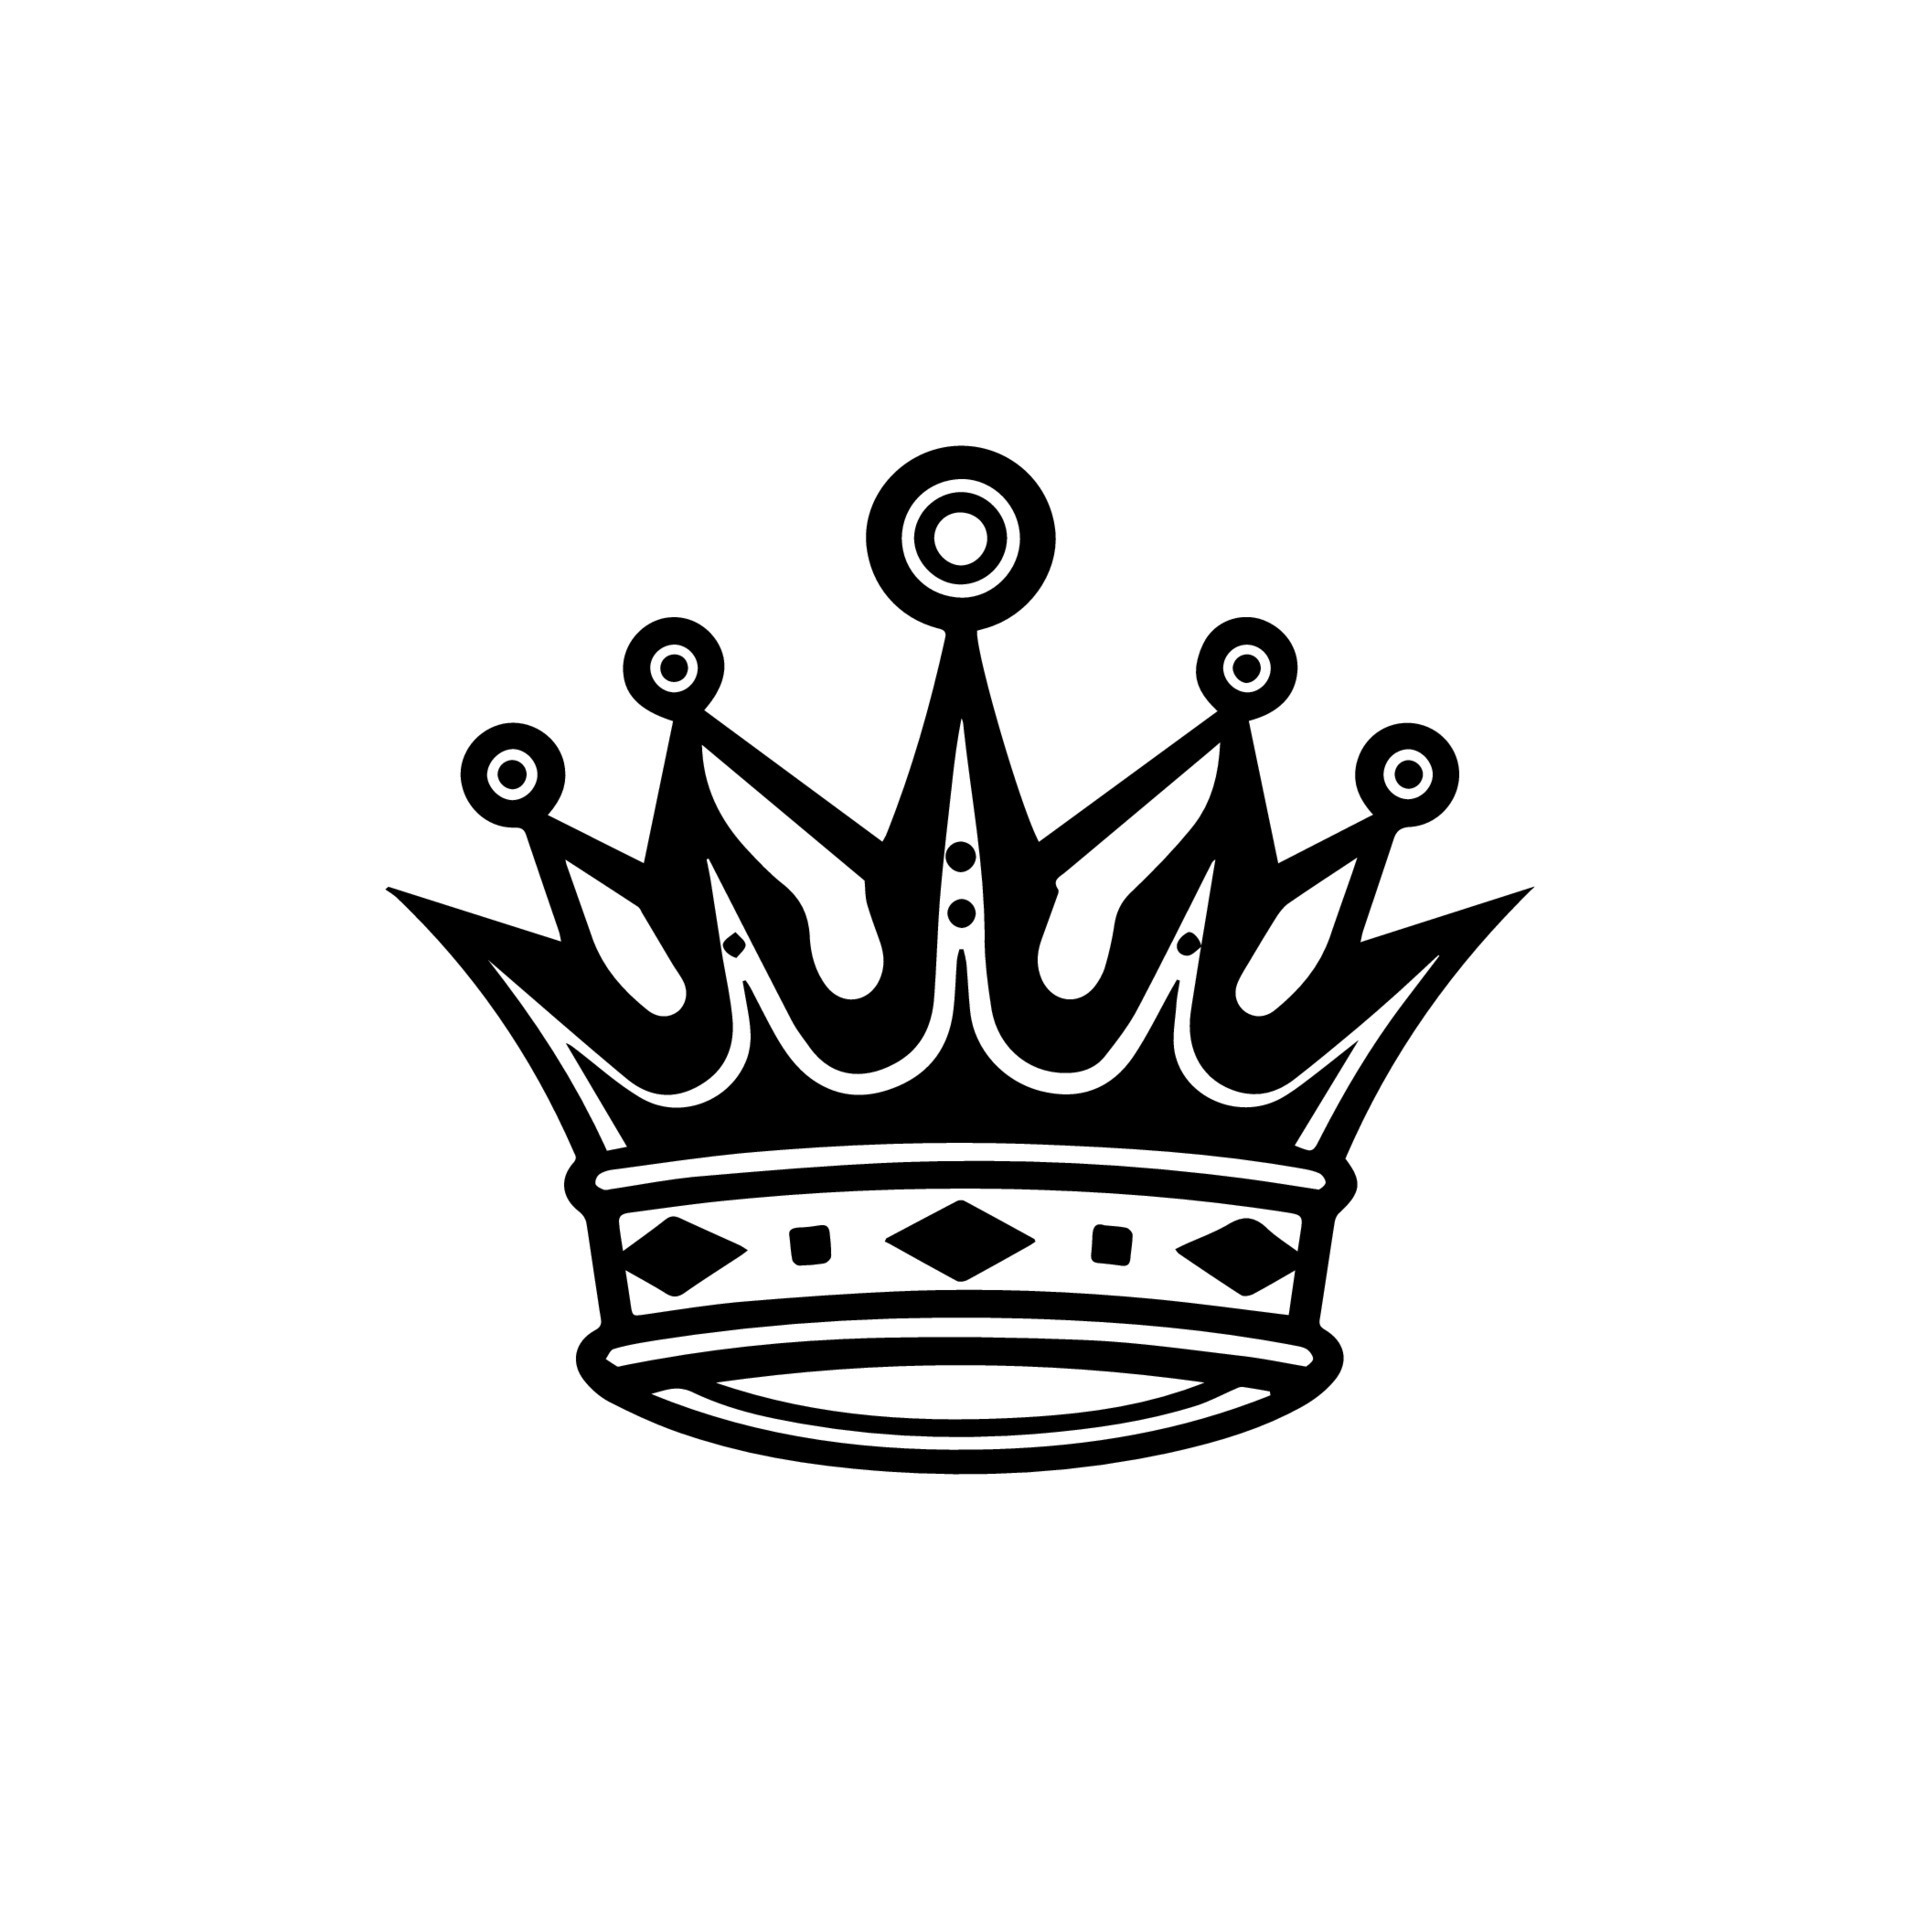 Simple crown logo design handdrawn illustration 23521334 Vector Art at ...